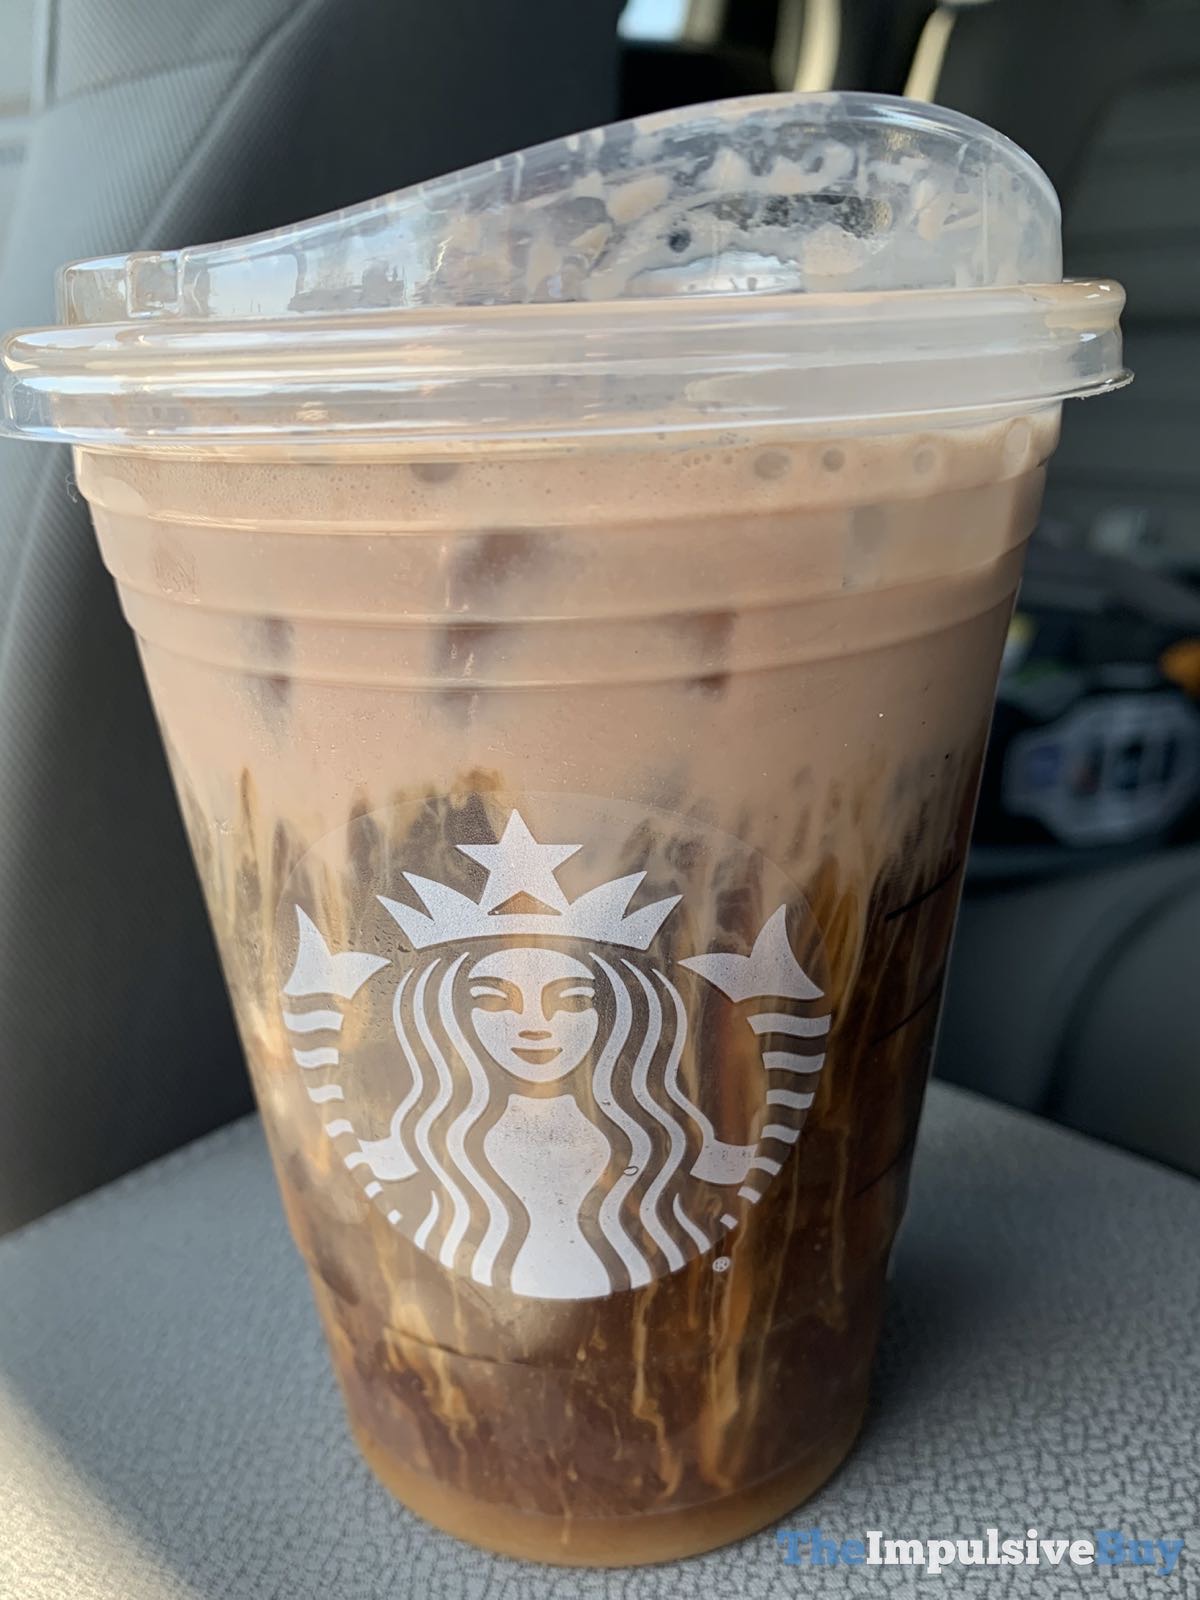 REVIEW: Starbucks Cold Brew with Dark Cocoa and Cinnamon ...